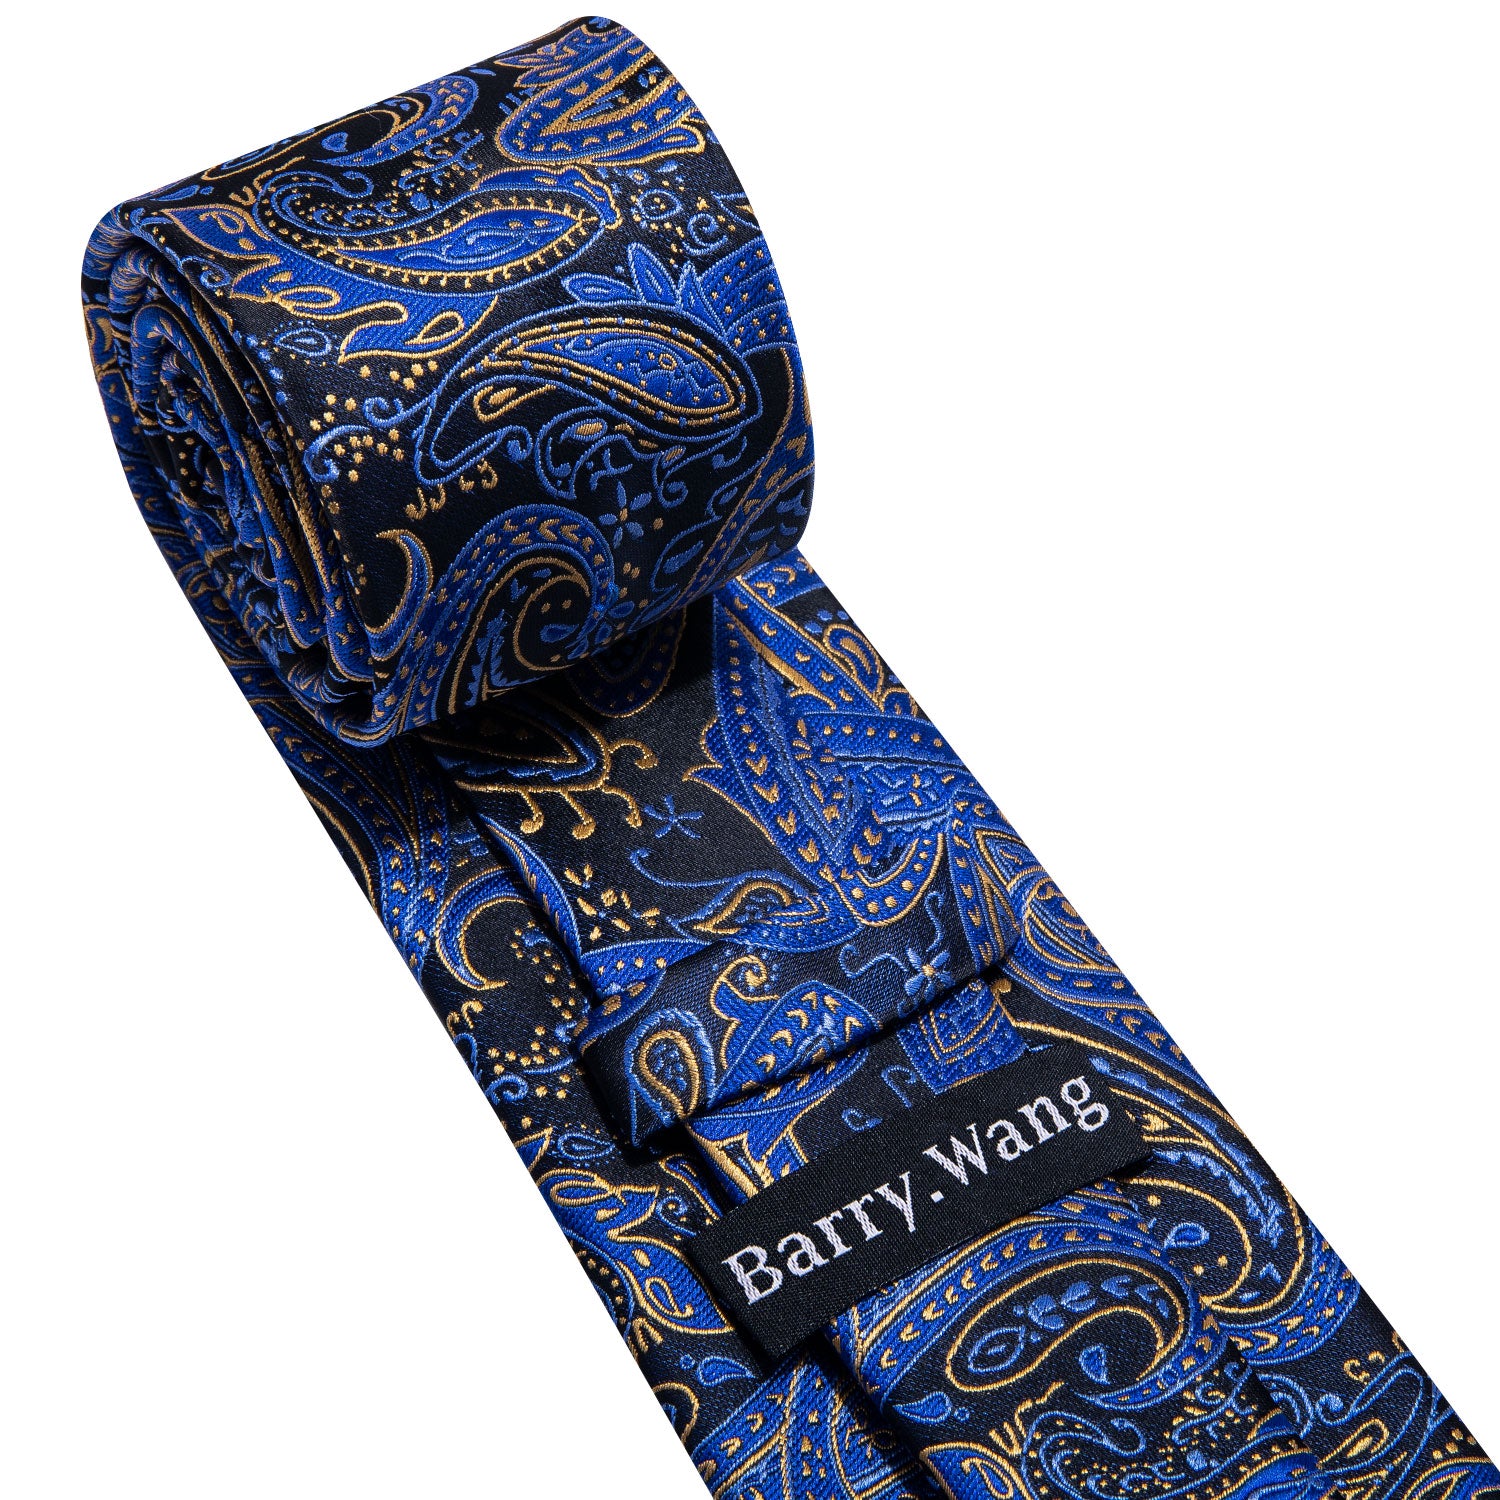 Barry.wang Blue Tie Yellow Paisley Men's Tie Pocket Square Cufflinks Set